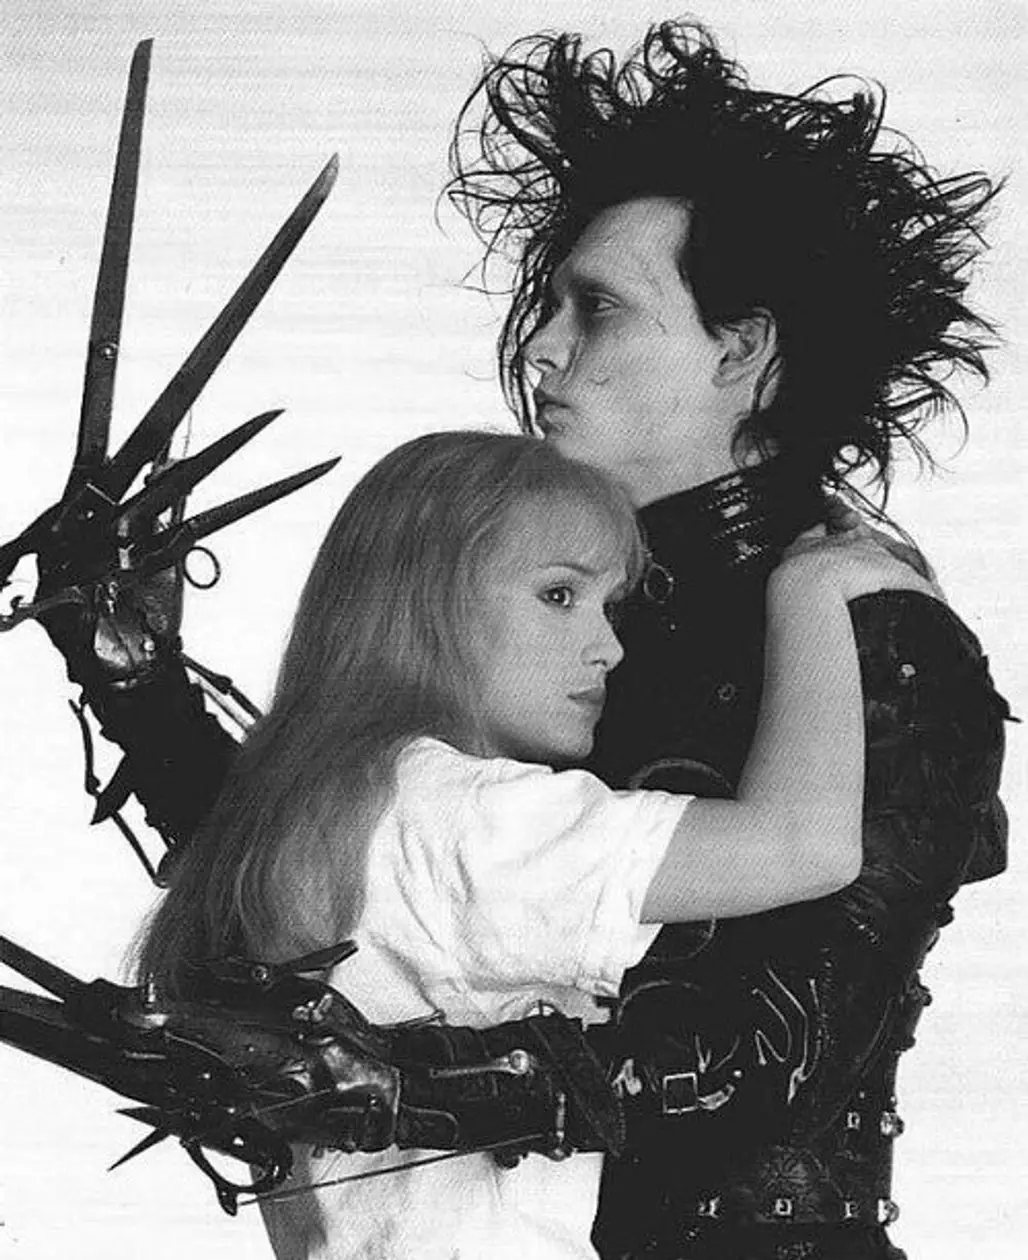 Johnny Depp & Winona Ryder in "Edward Scissorhands"